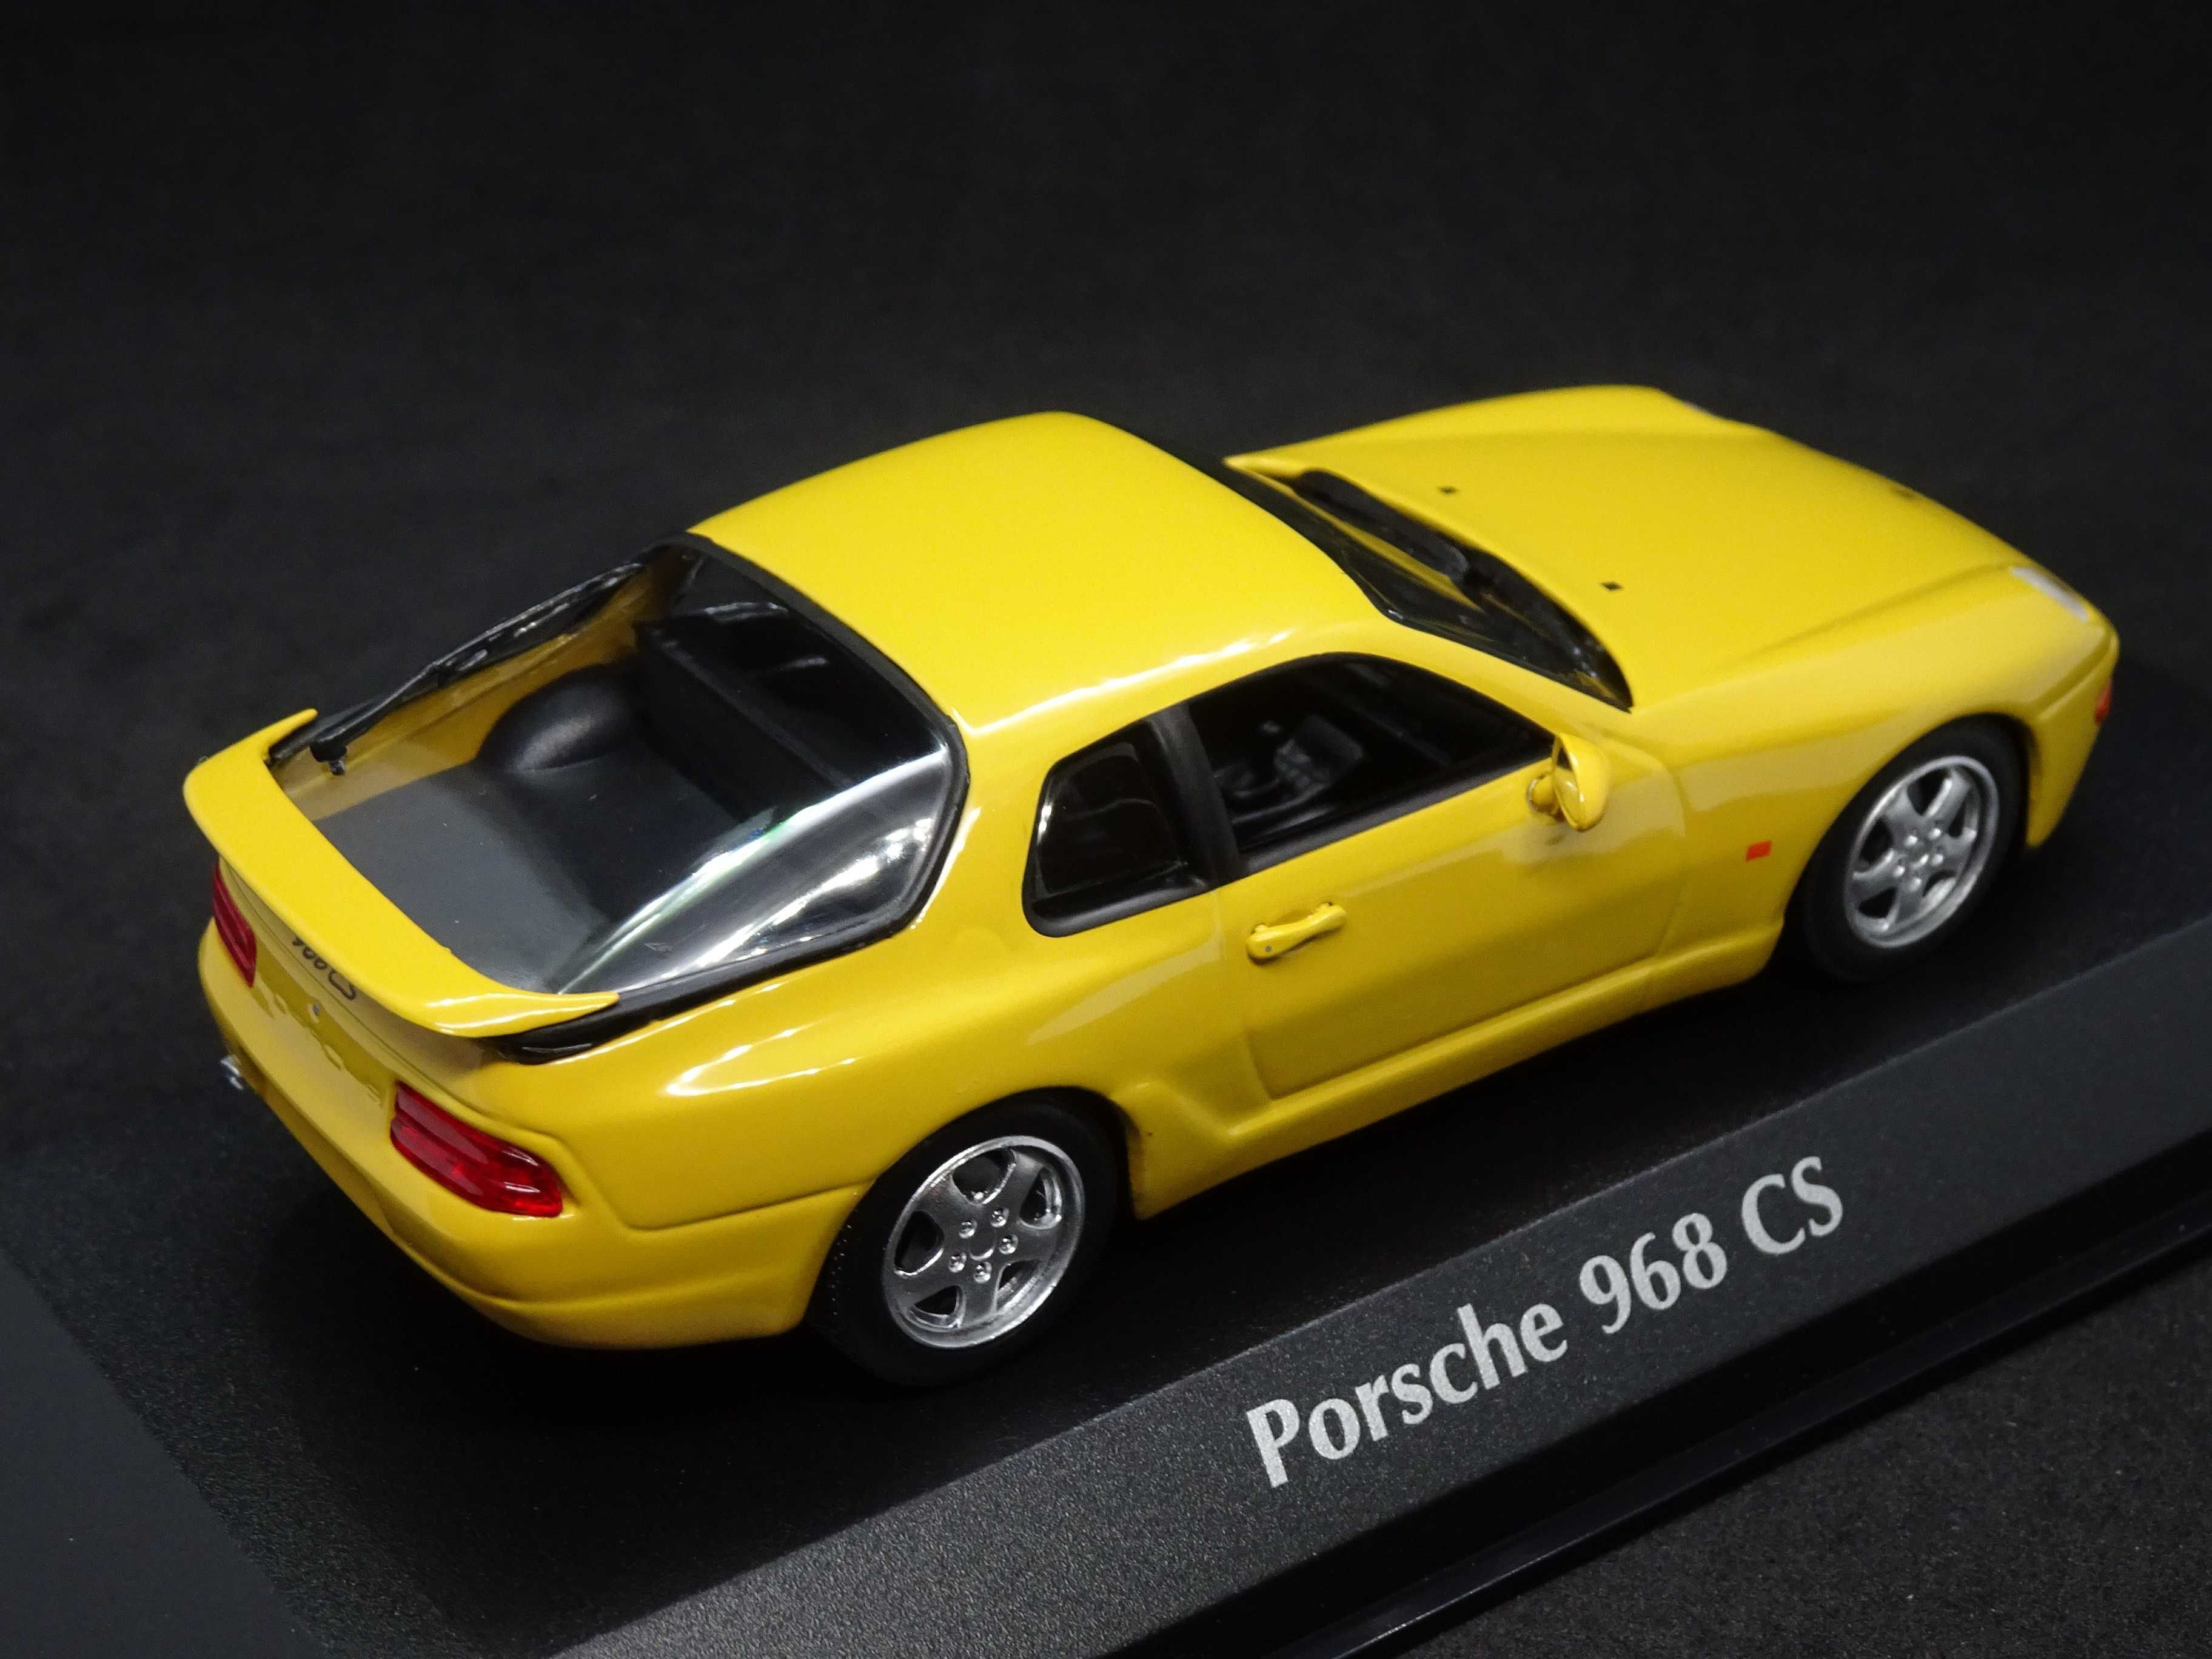 Macheta Porsche 968 CS Maxichamps 1:43